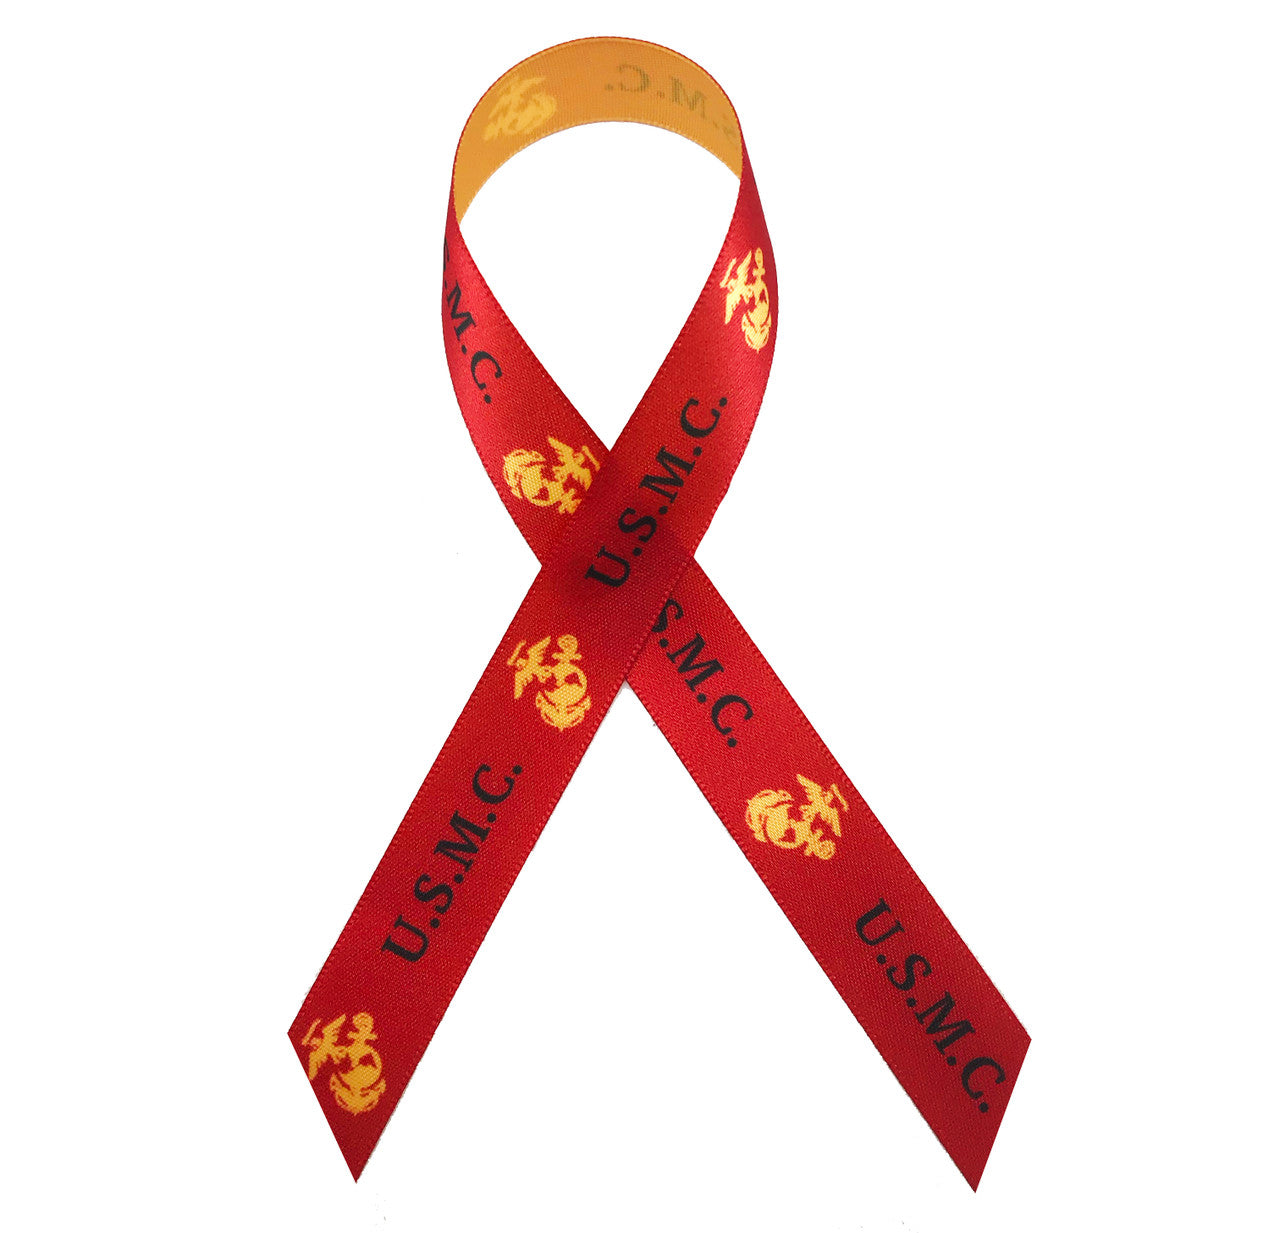 Realistic red ribbon aids symbol Royalty Free Vector Image